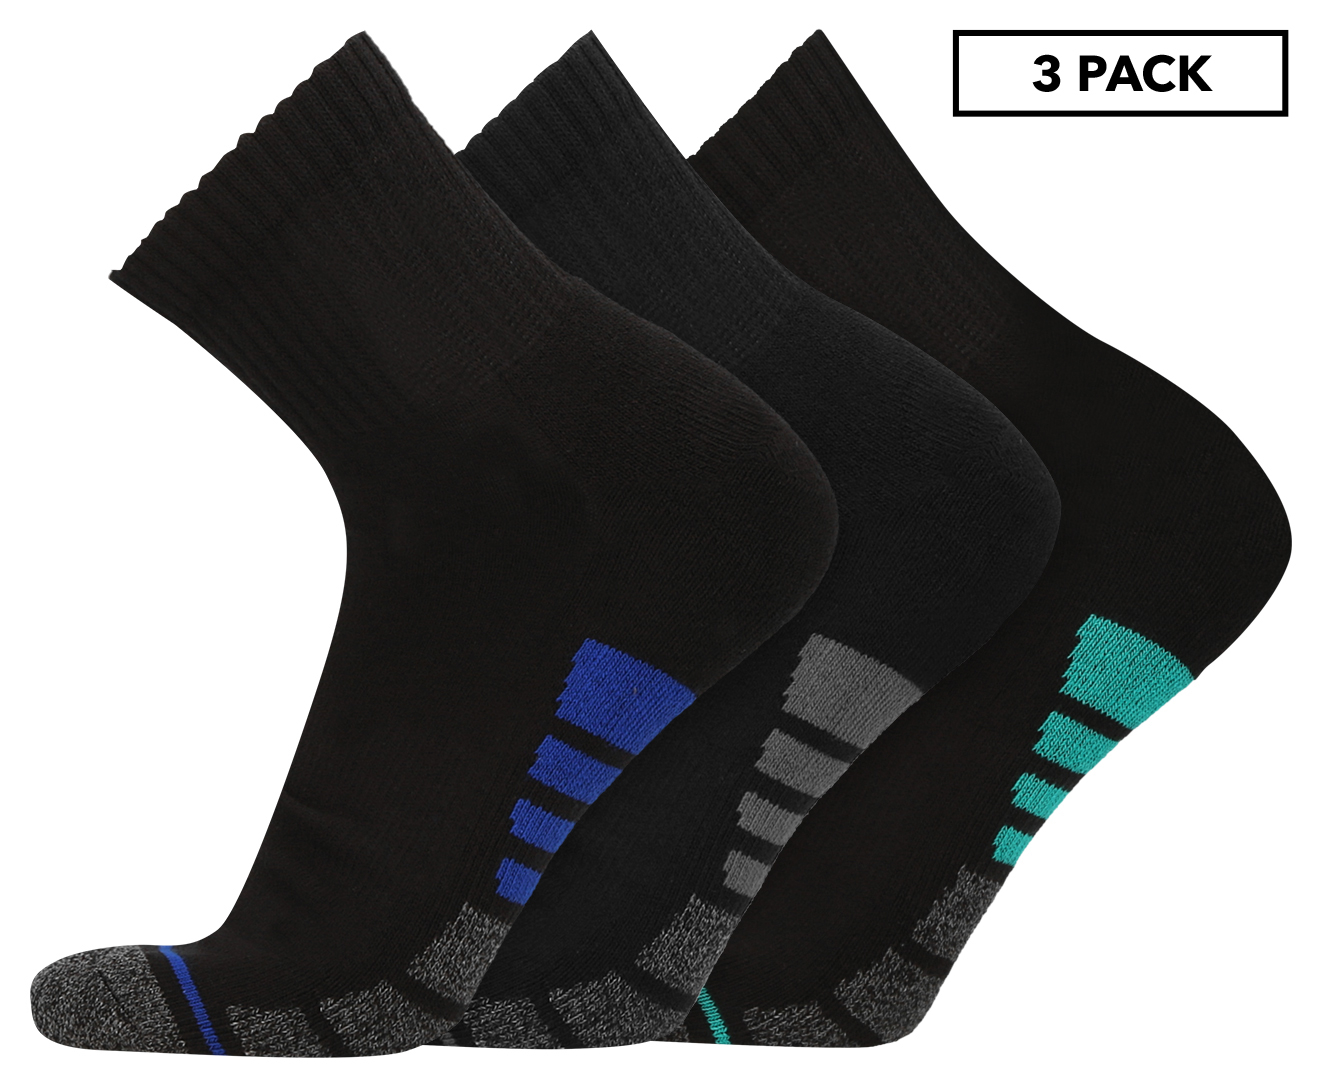 Underworks Men's Sport Quarter Crew Socks 3-Pack - Black | Catch.co.nz